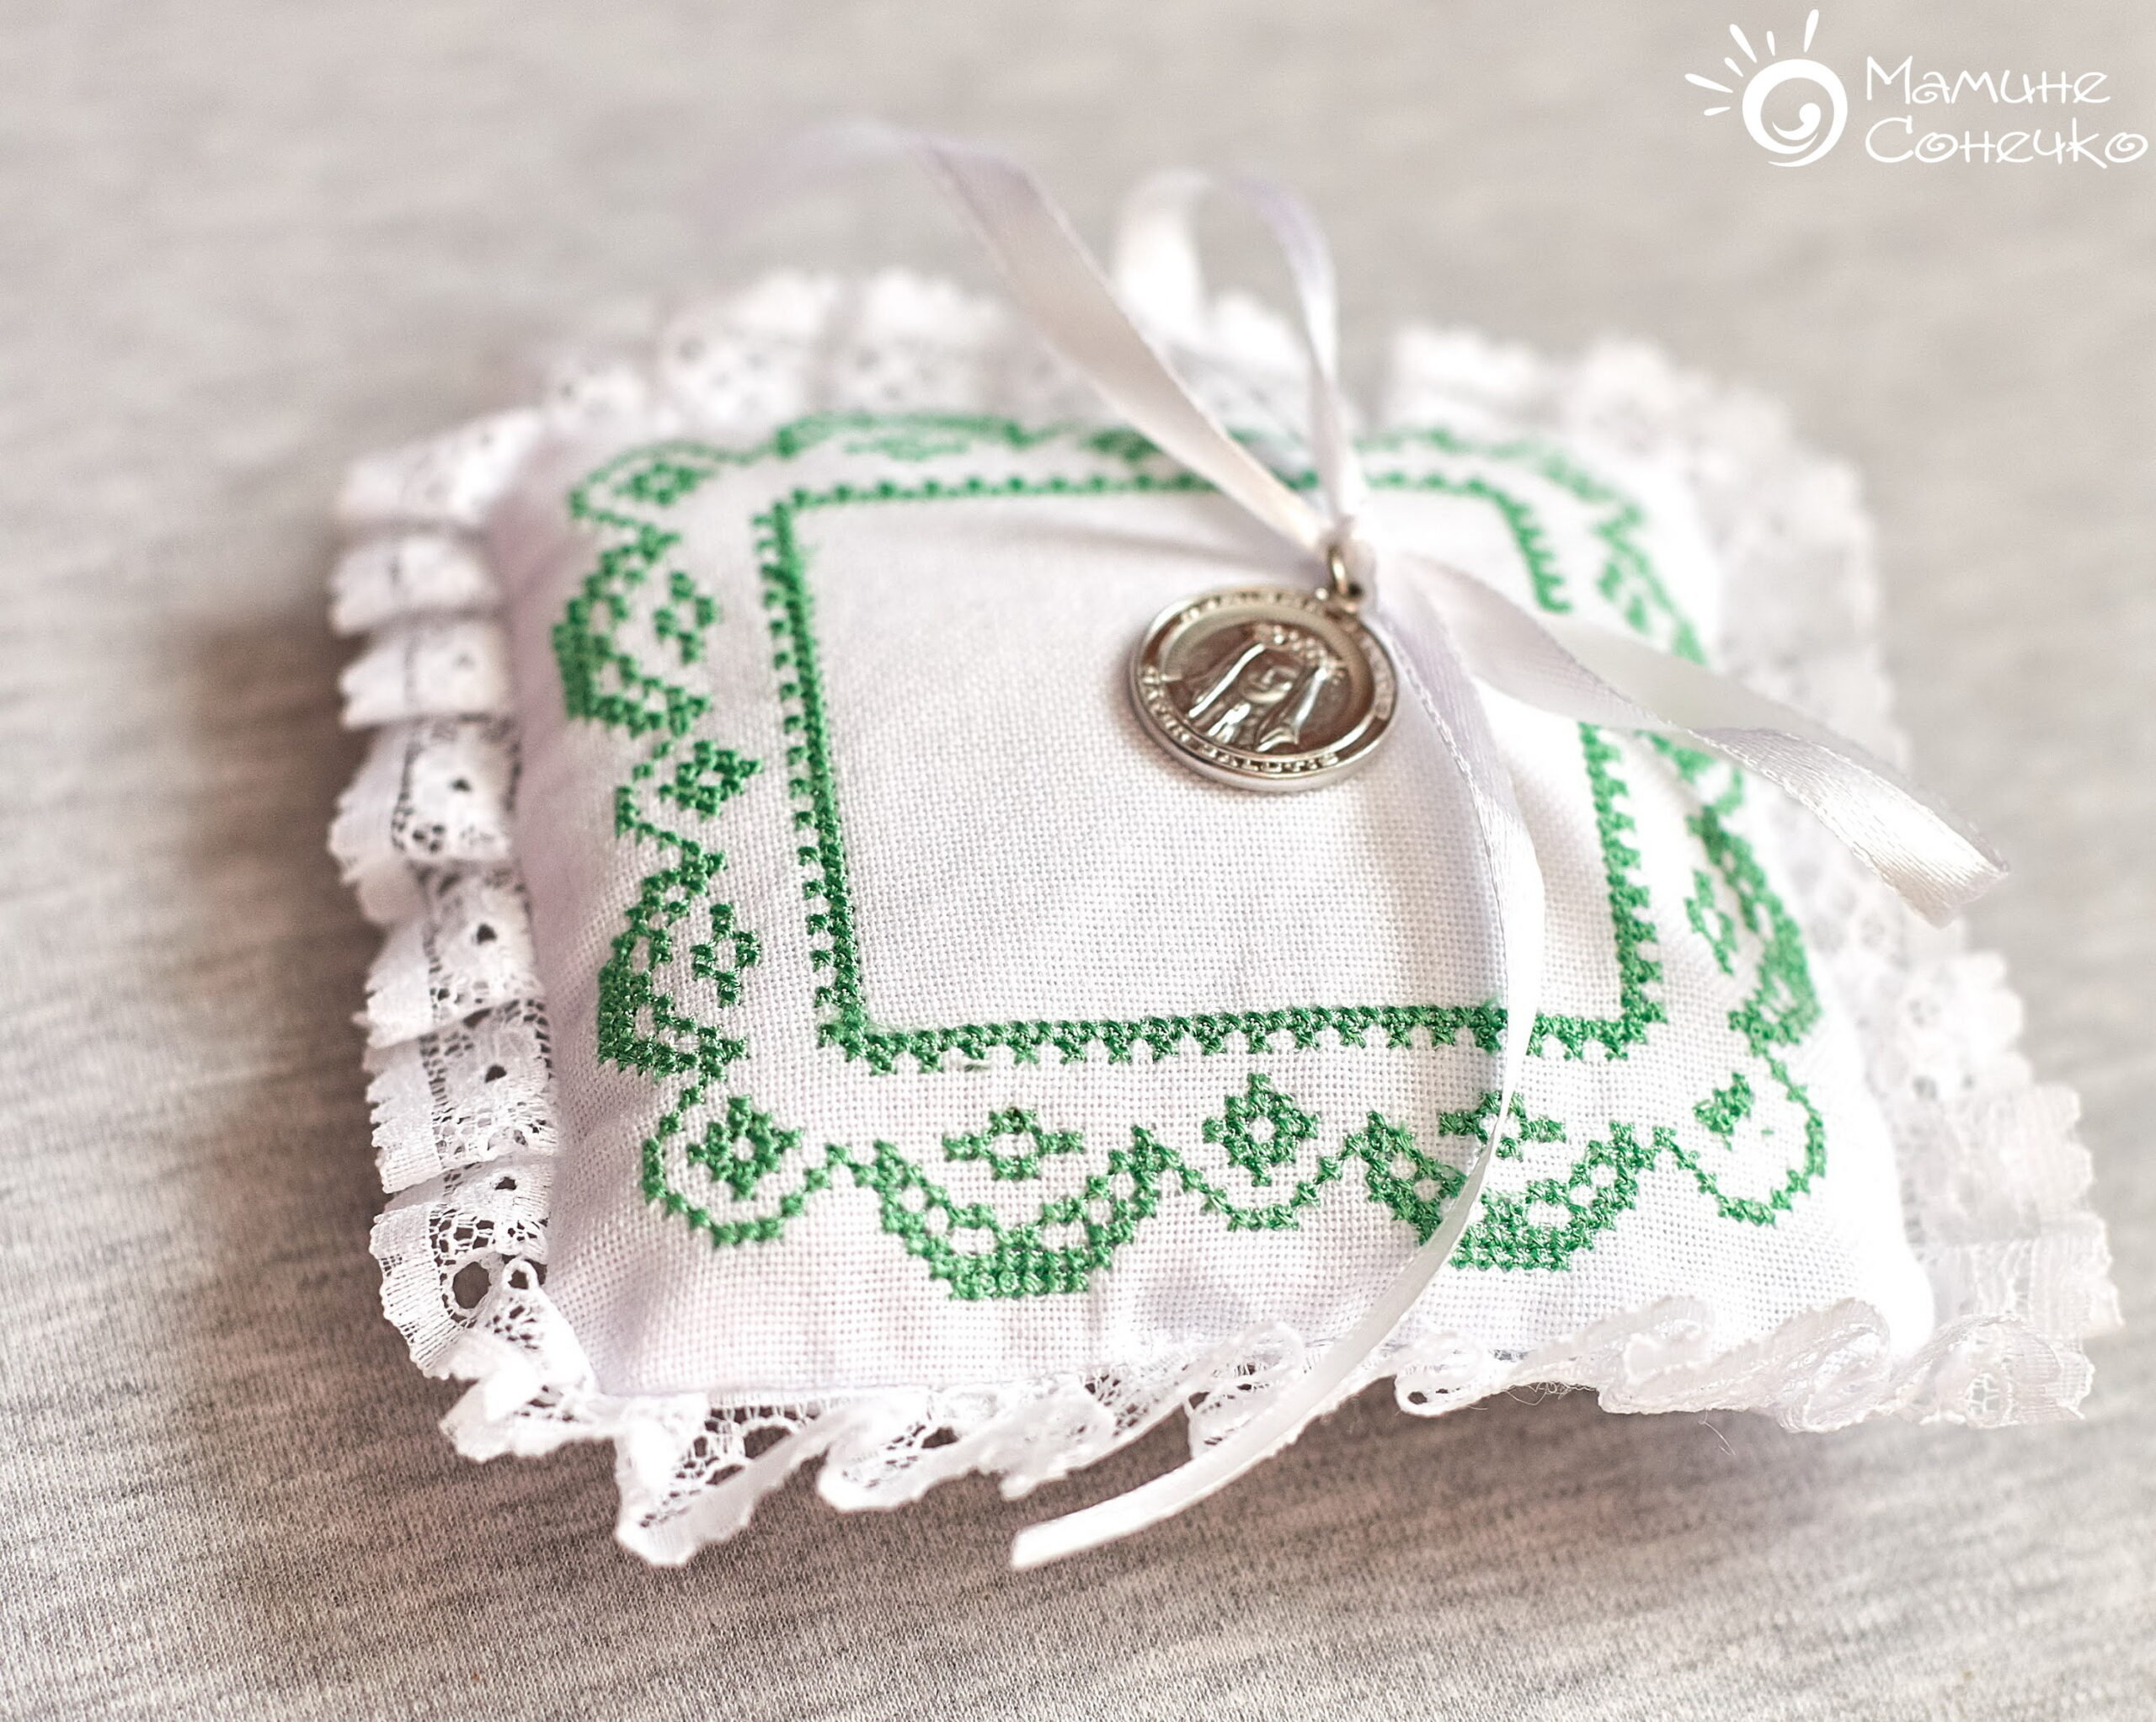 Cross stitch pad “Monochrome green”, linen